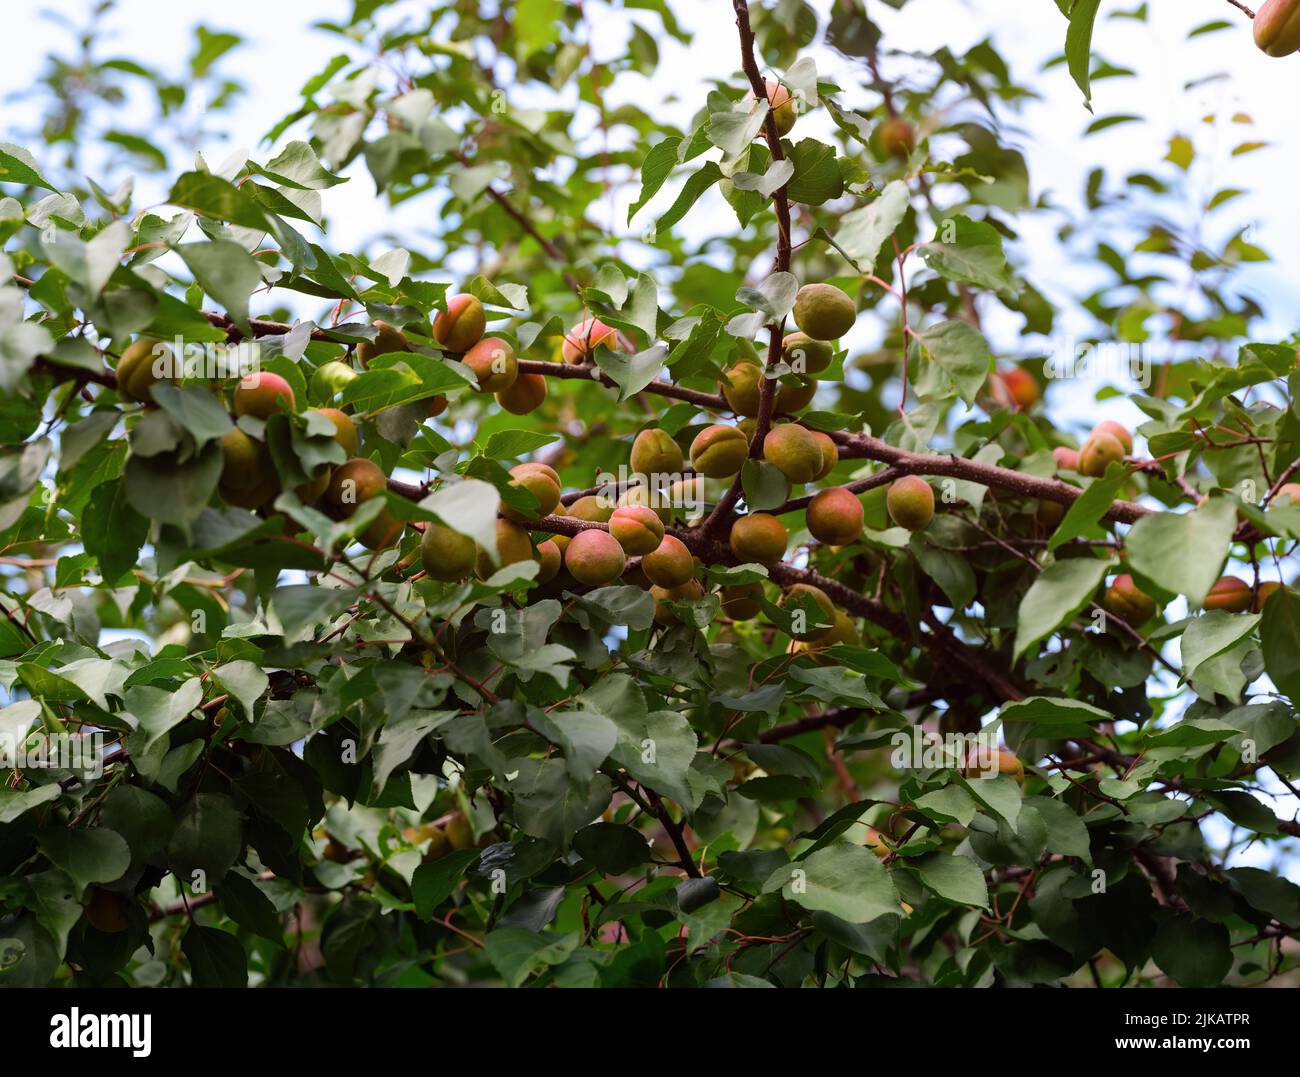 Albaricoques orgánicos que crecen en ramas de un árbol. Foto de stock